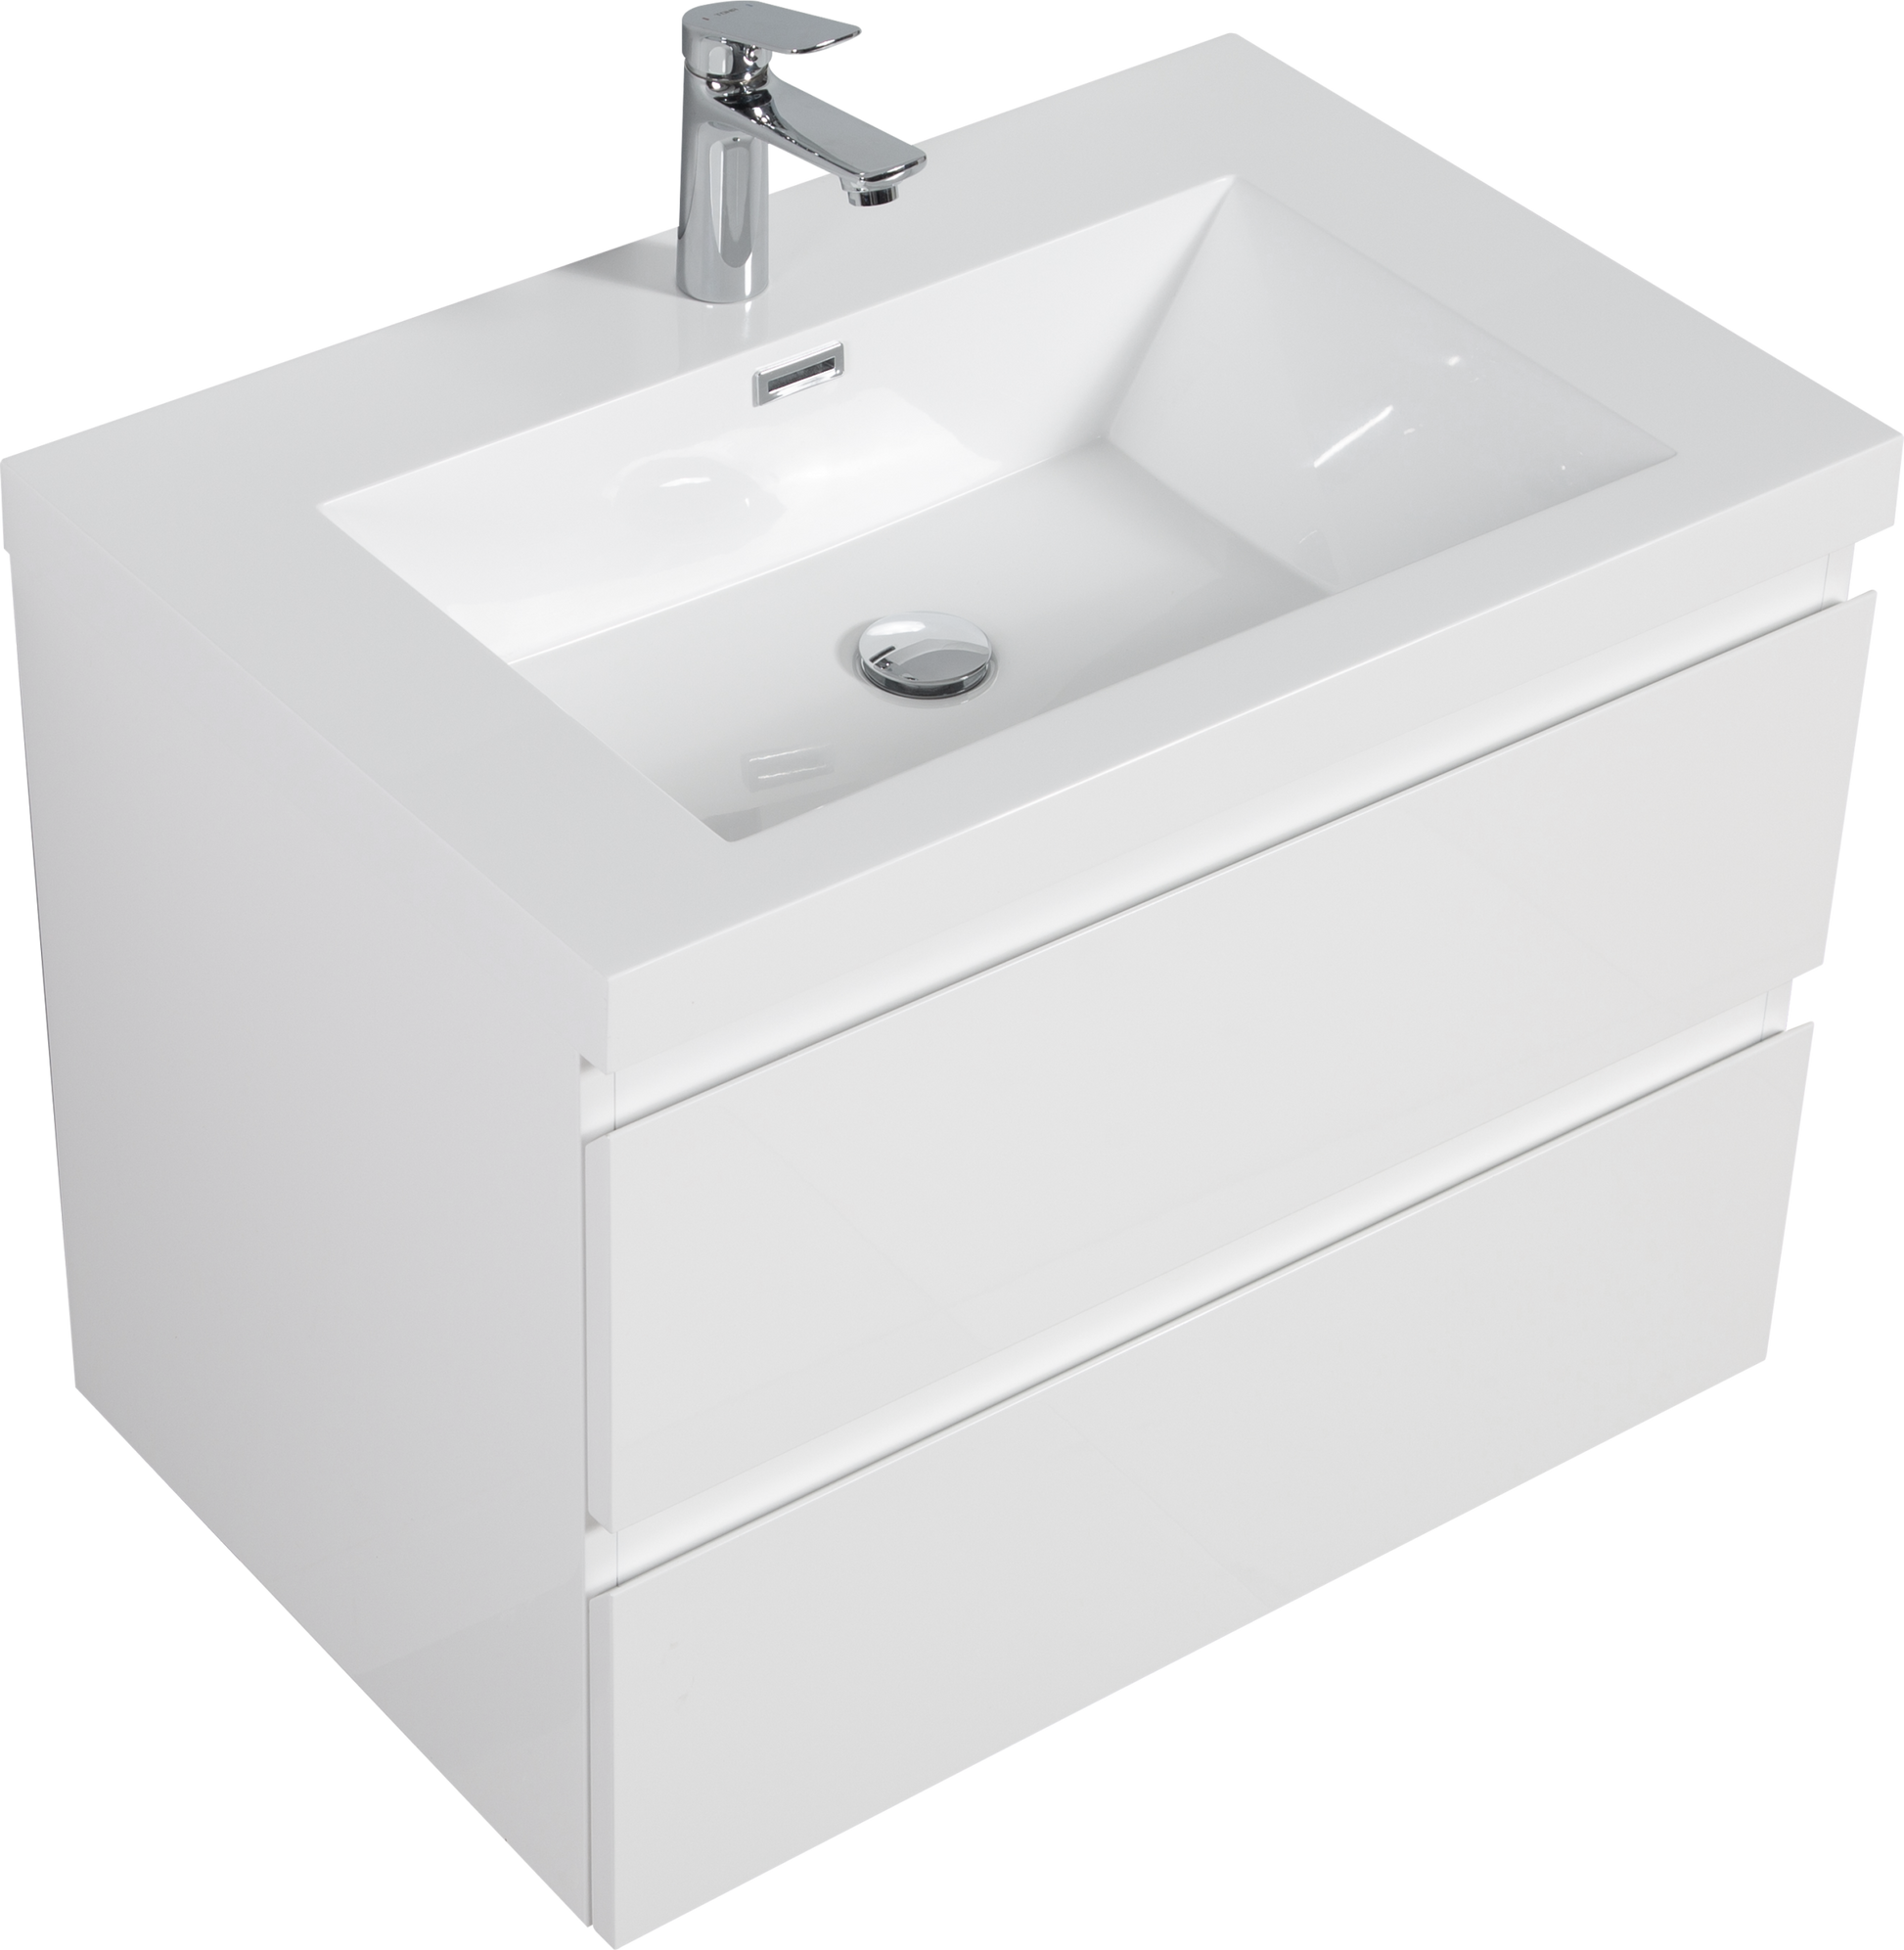 30" Floating Bathroom Vanity with Sink, Modern Wall 2-white-bathroom-wall mounted-mdf